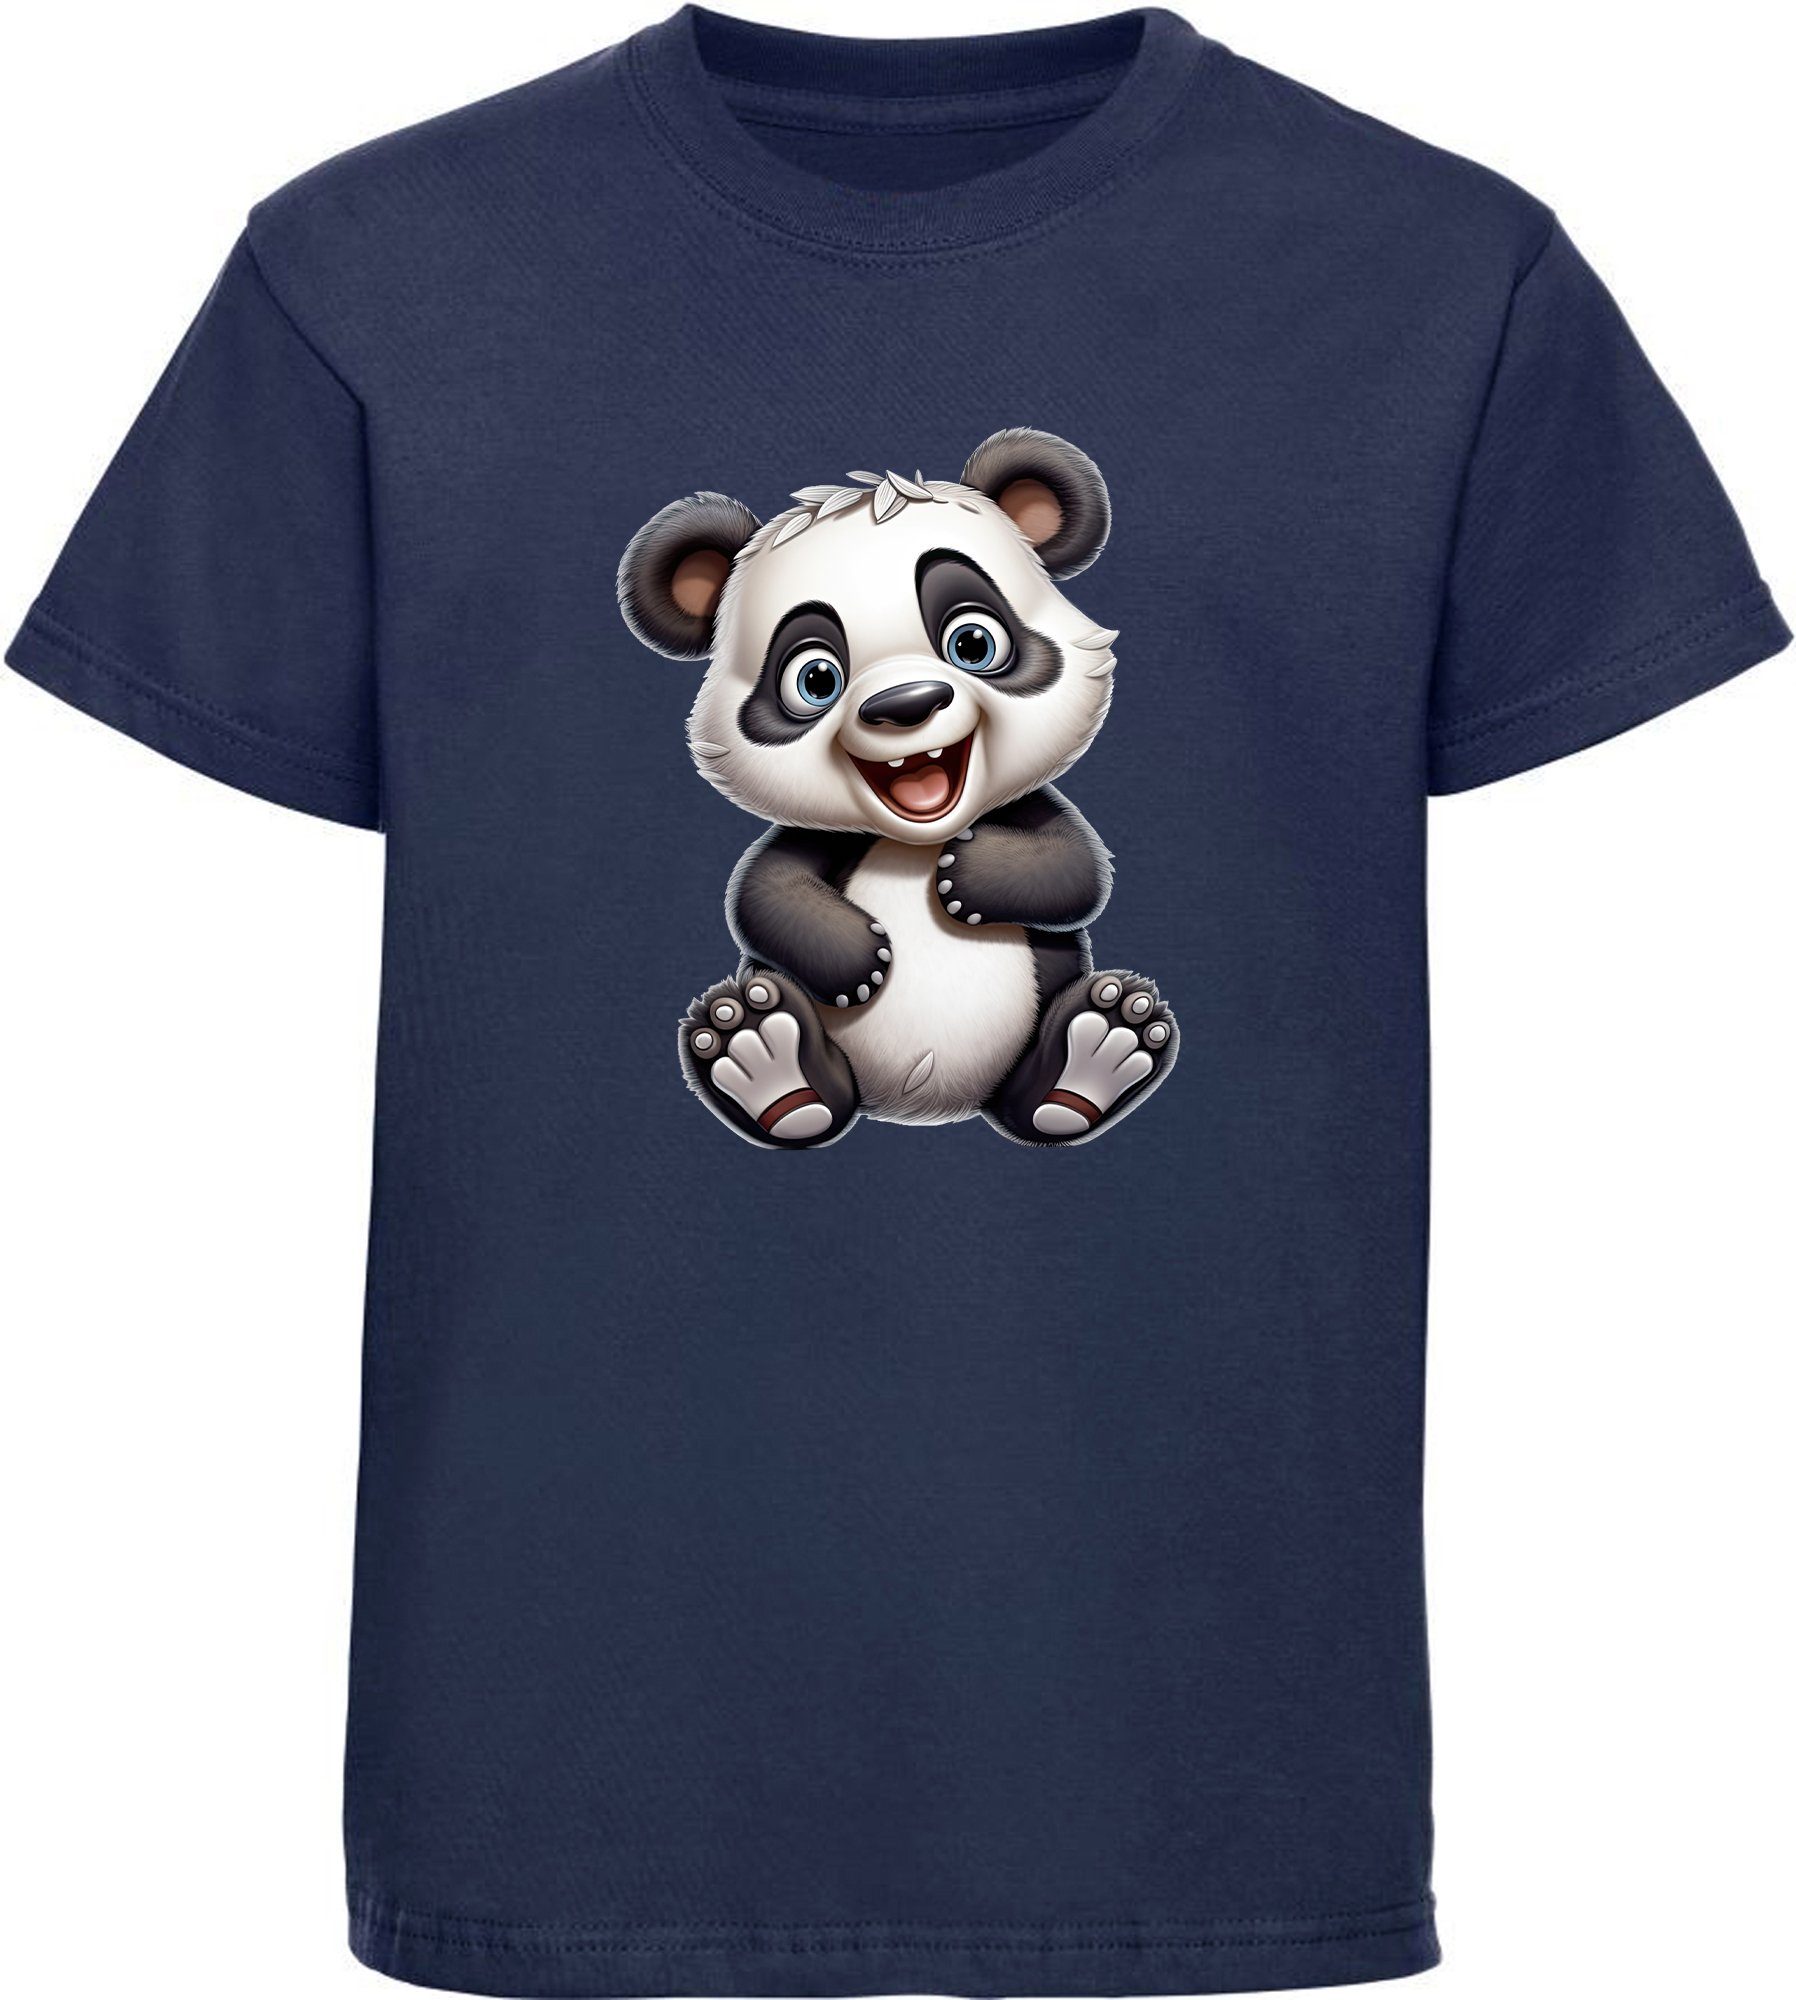 MyDesign24 T-Shirt Kinder Wildtier Print Shirt bedruckt - Baby Panda Bär Baumwollshirt mit Aufdruck, i277 navy blau